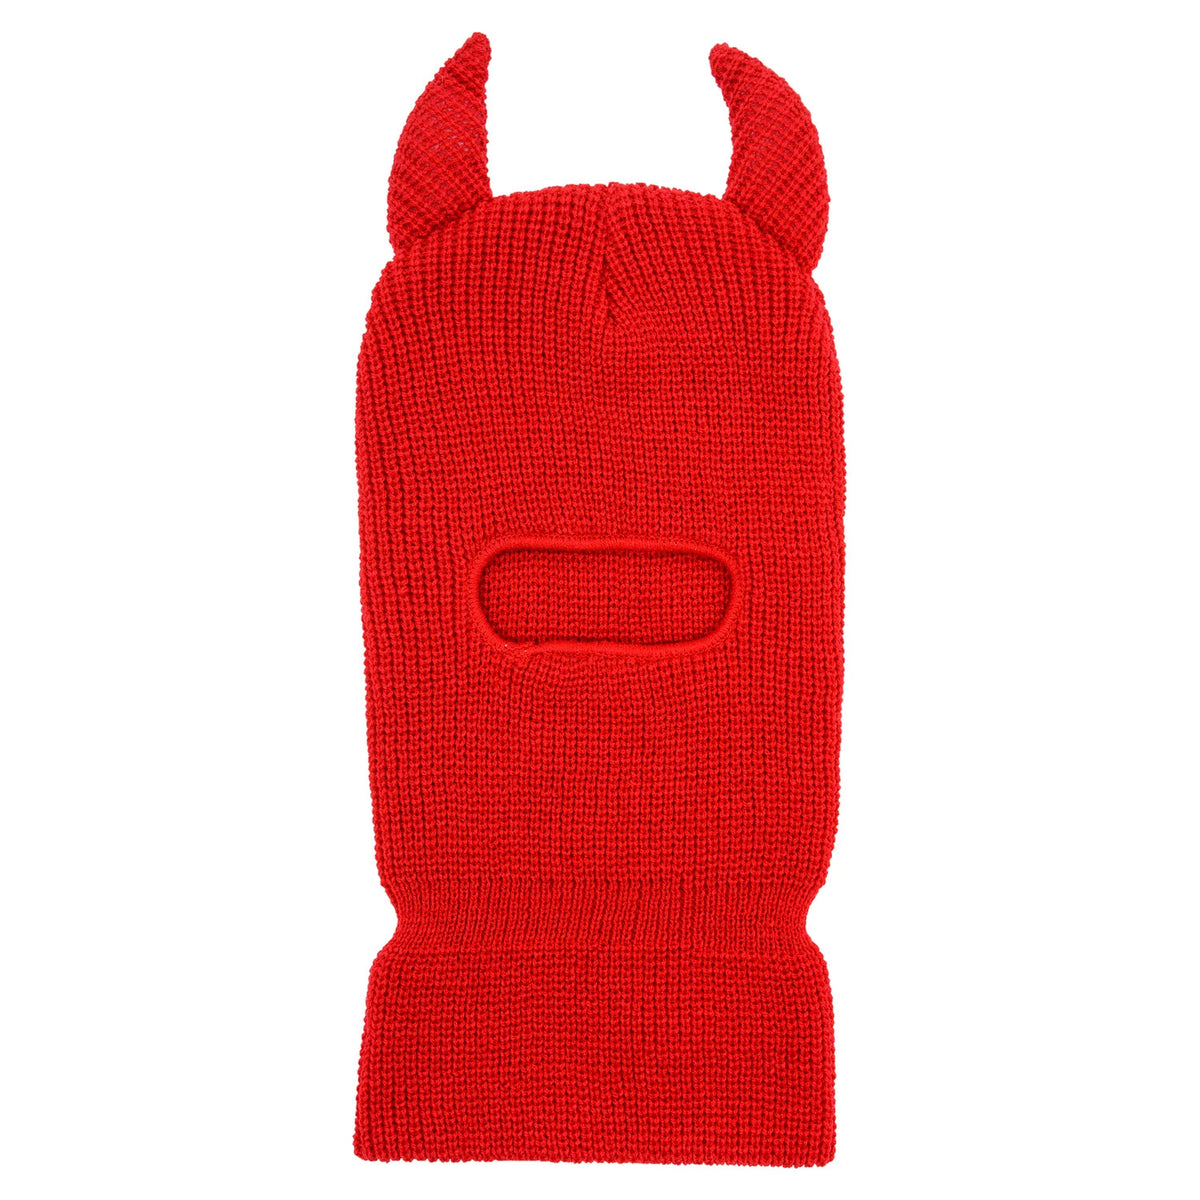 Devil Horns Ear Ski Mask Red Balaclava